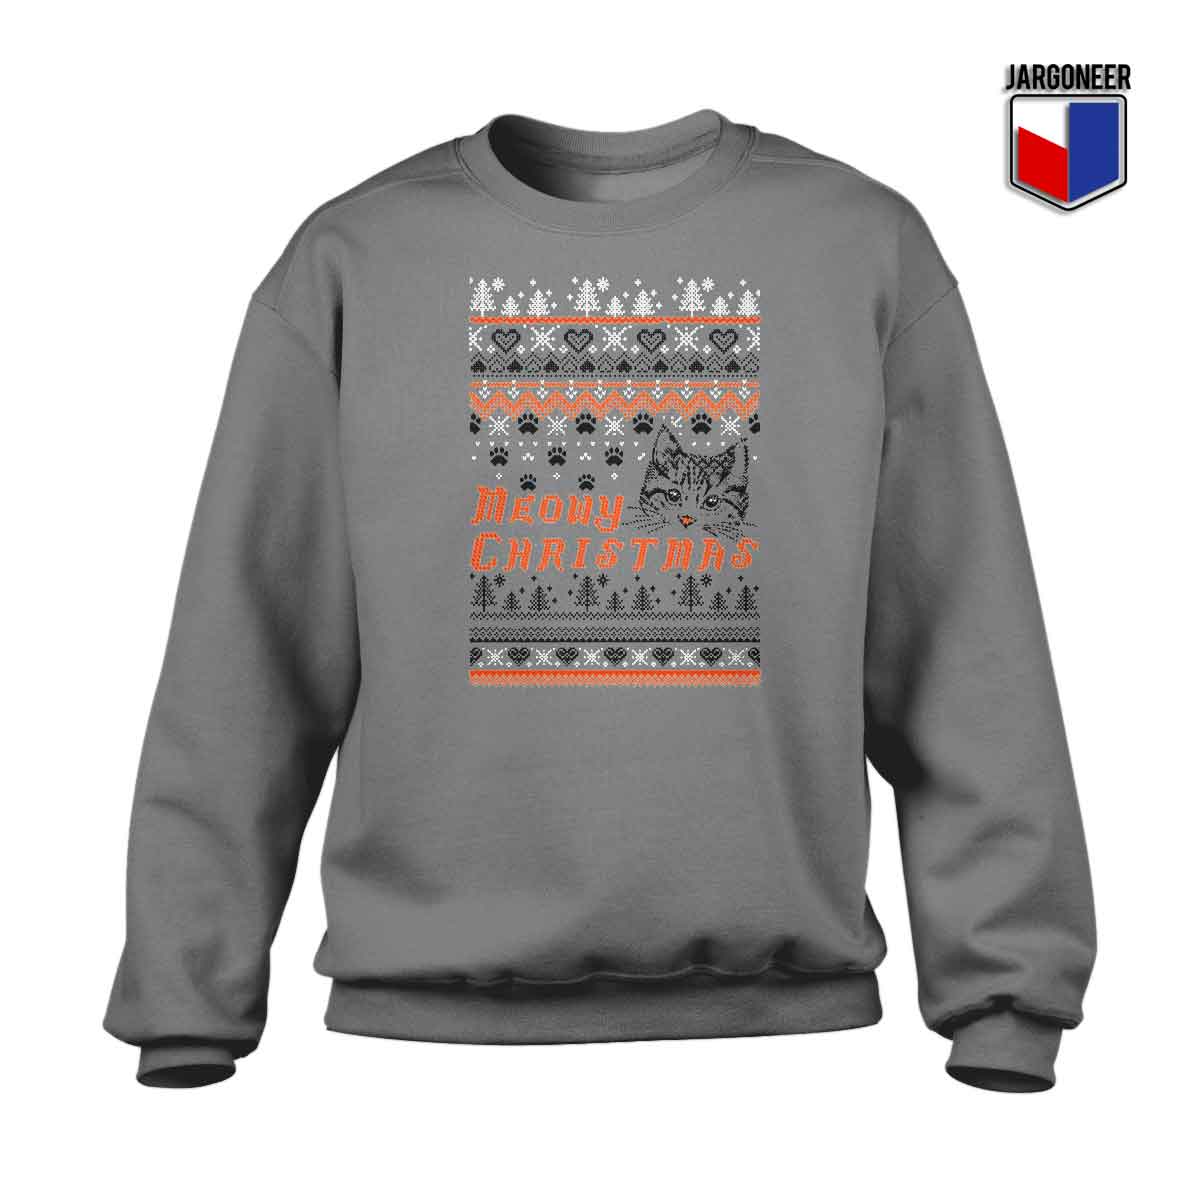 Meowy Christmas Crewneck Sweatshirt - Shop Unique Graphic Cool Shirt Designs